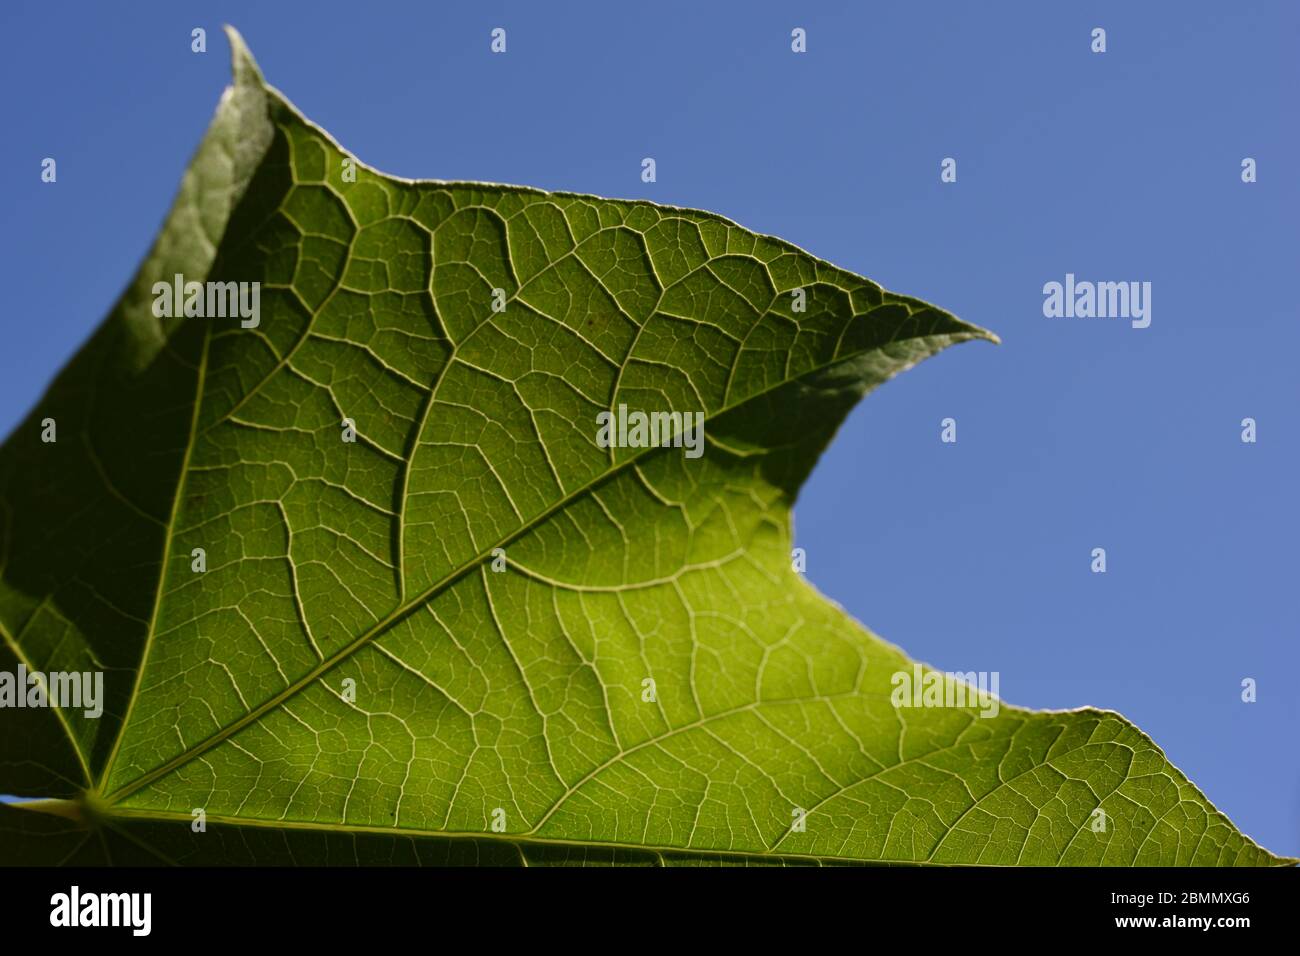 Jatropha leaf texture against blue clear sky Stock Photo